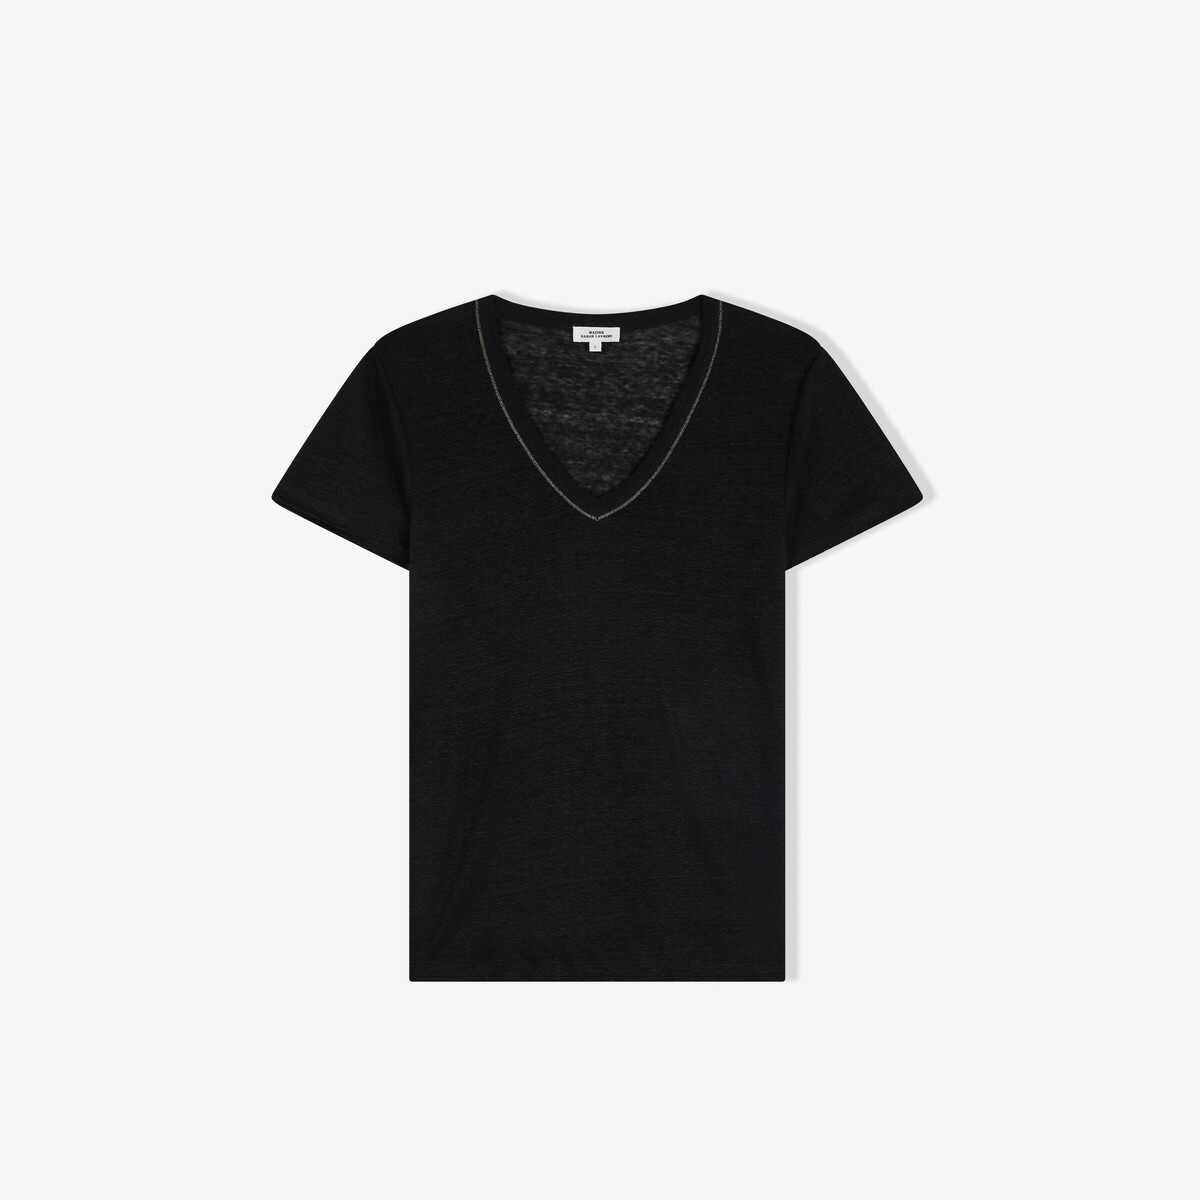 T-shirt Salin, Black - V-neck T-shirt with gold lurex finish - 100% linen - image 2